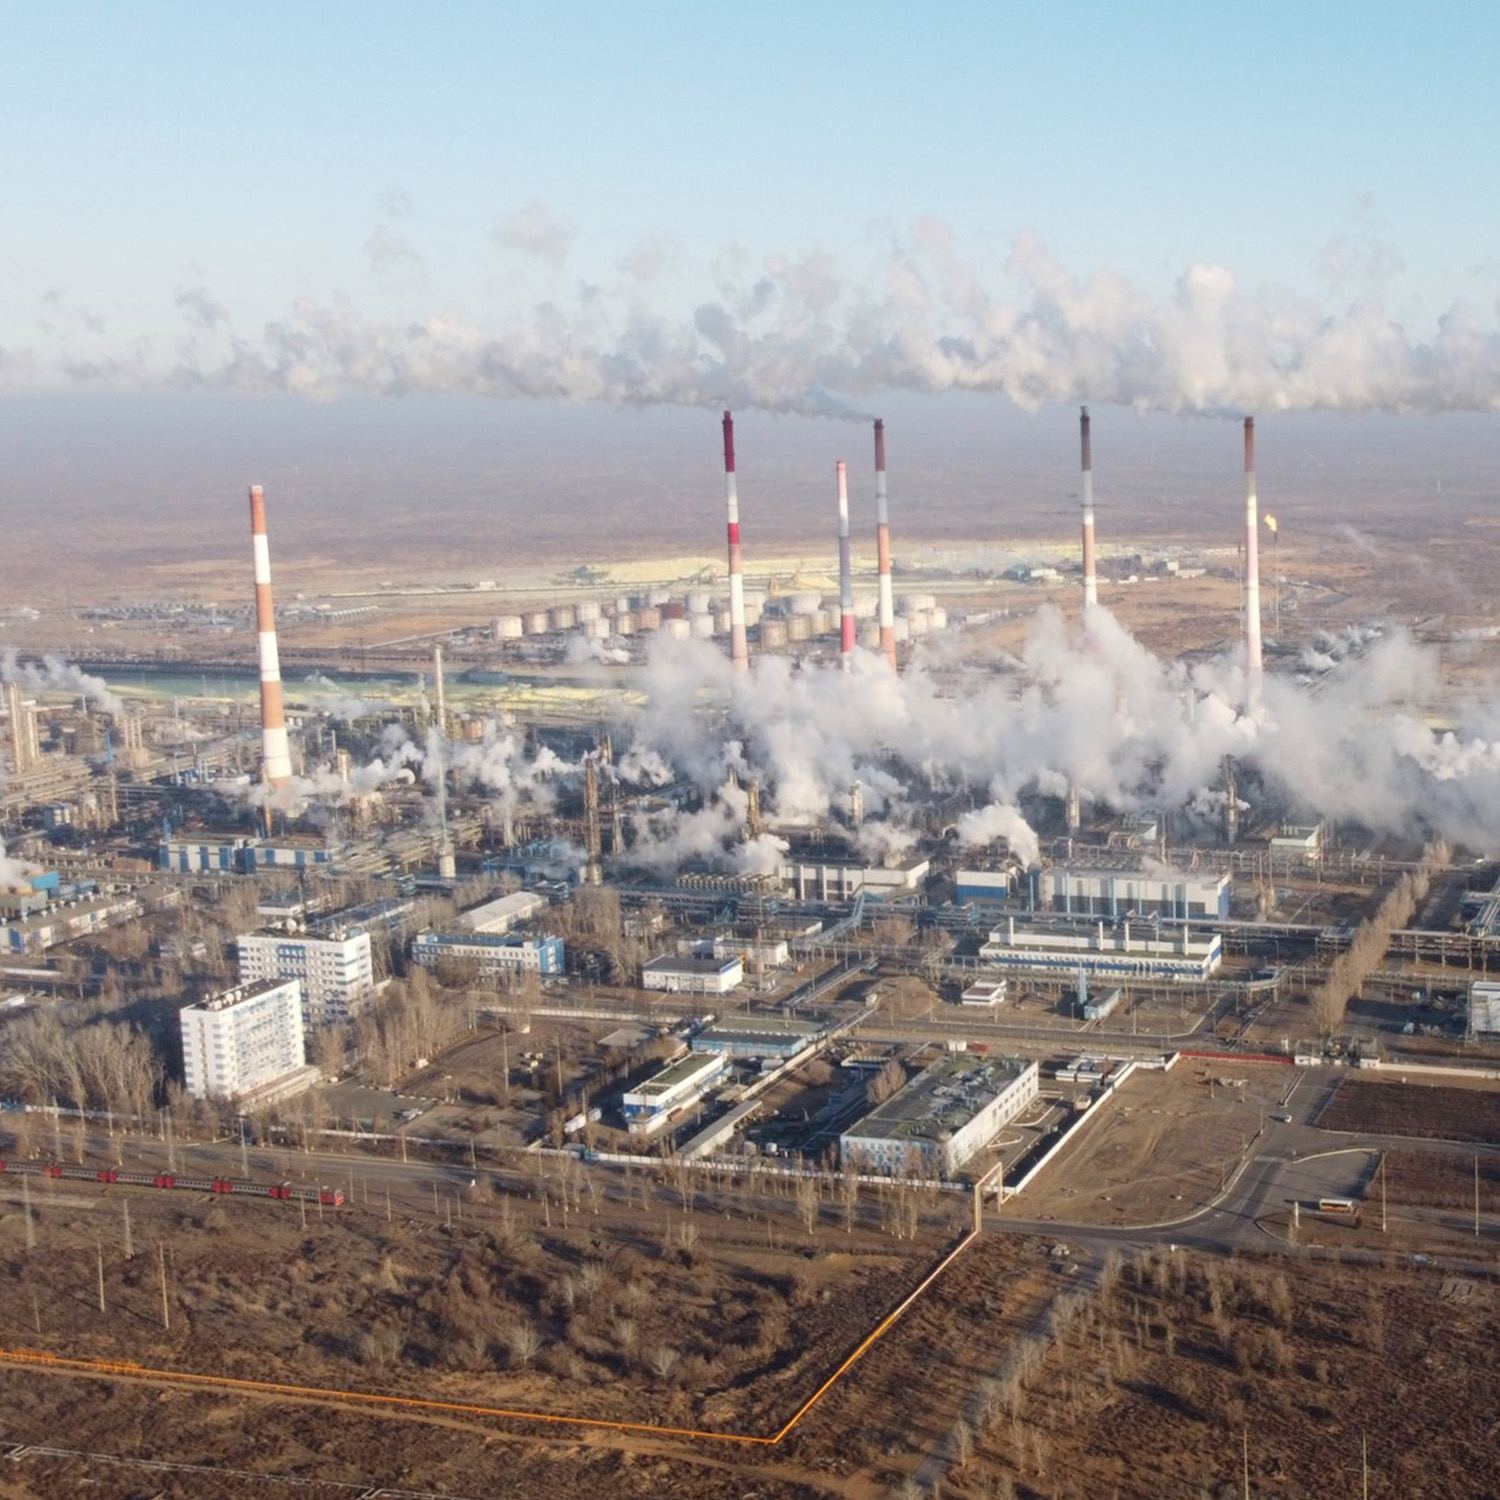 Astrakhan gas processing plant